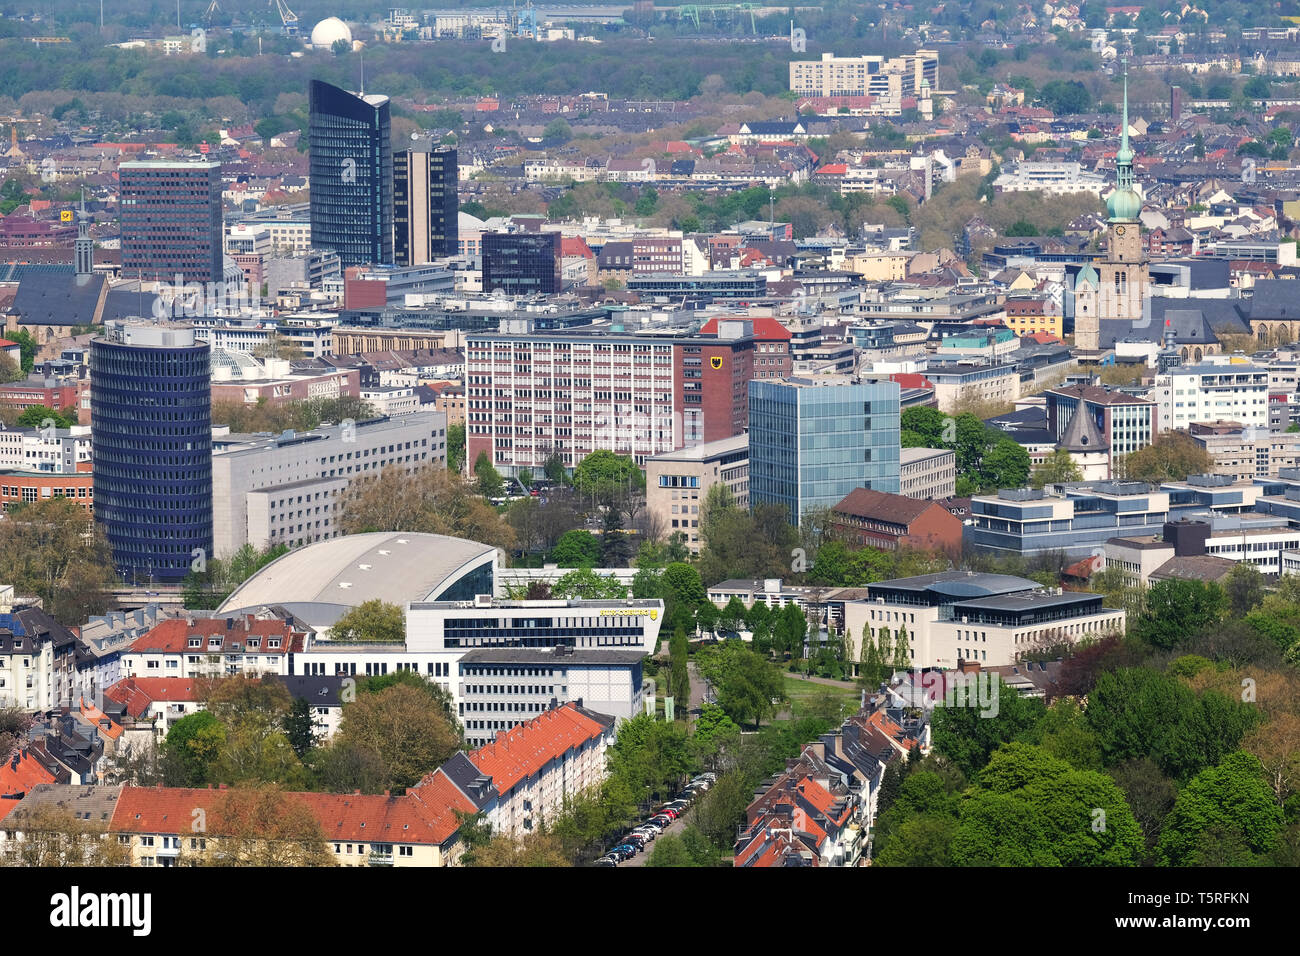 View of the city center of Dortmund with RWE-tower, St. Reinoldi church and St. Peter's Church (Petrikirche). Dortmund, Germany Stock Photo